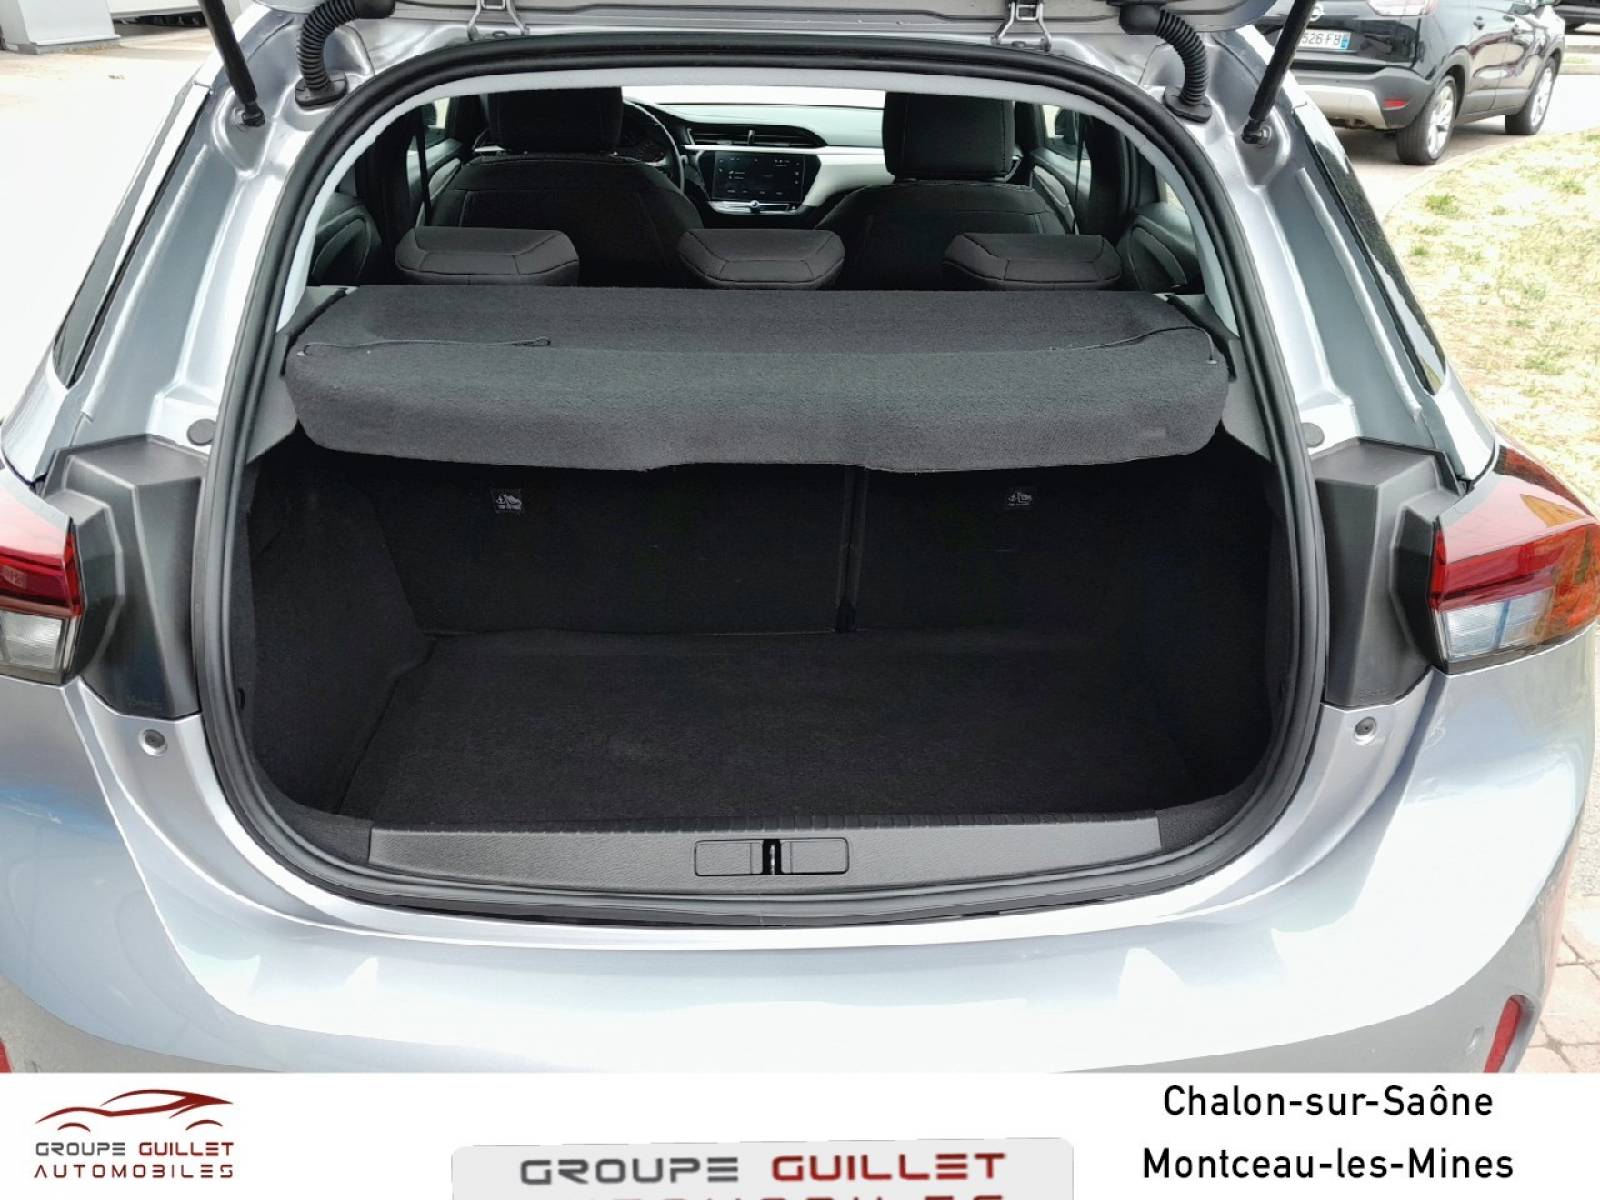 OPEL Corsa 1.2 75 ch BVM5 - véhicule d'occasion - Groupe Guillet - Opel Magicauto Chalon - 71380 - Saint-Marcel - 6